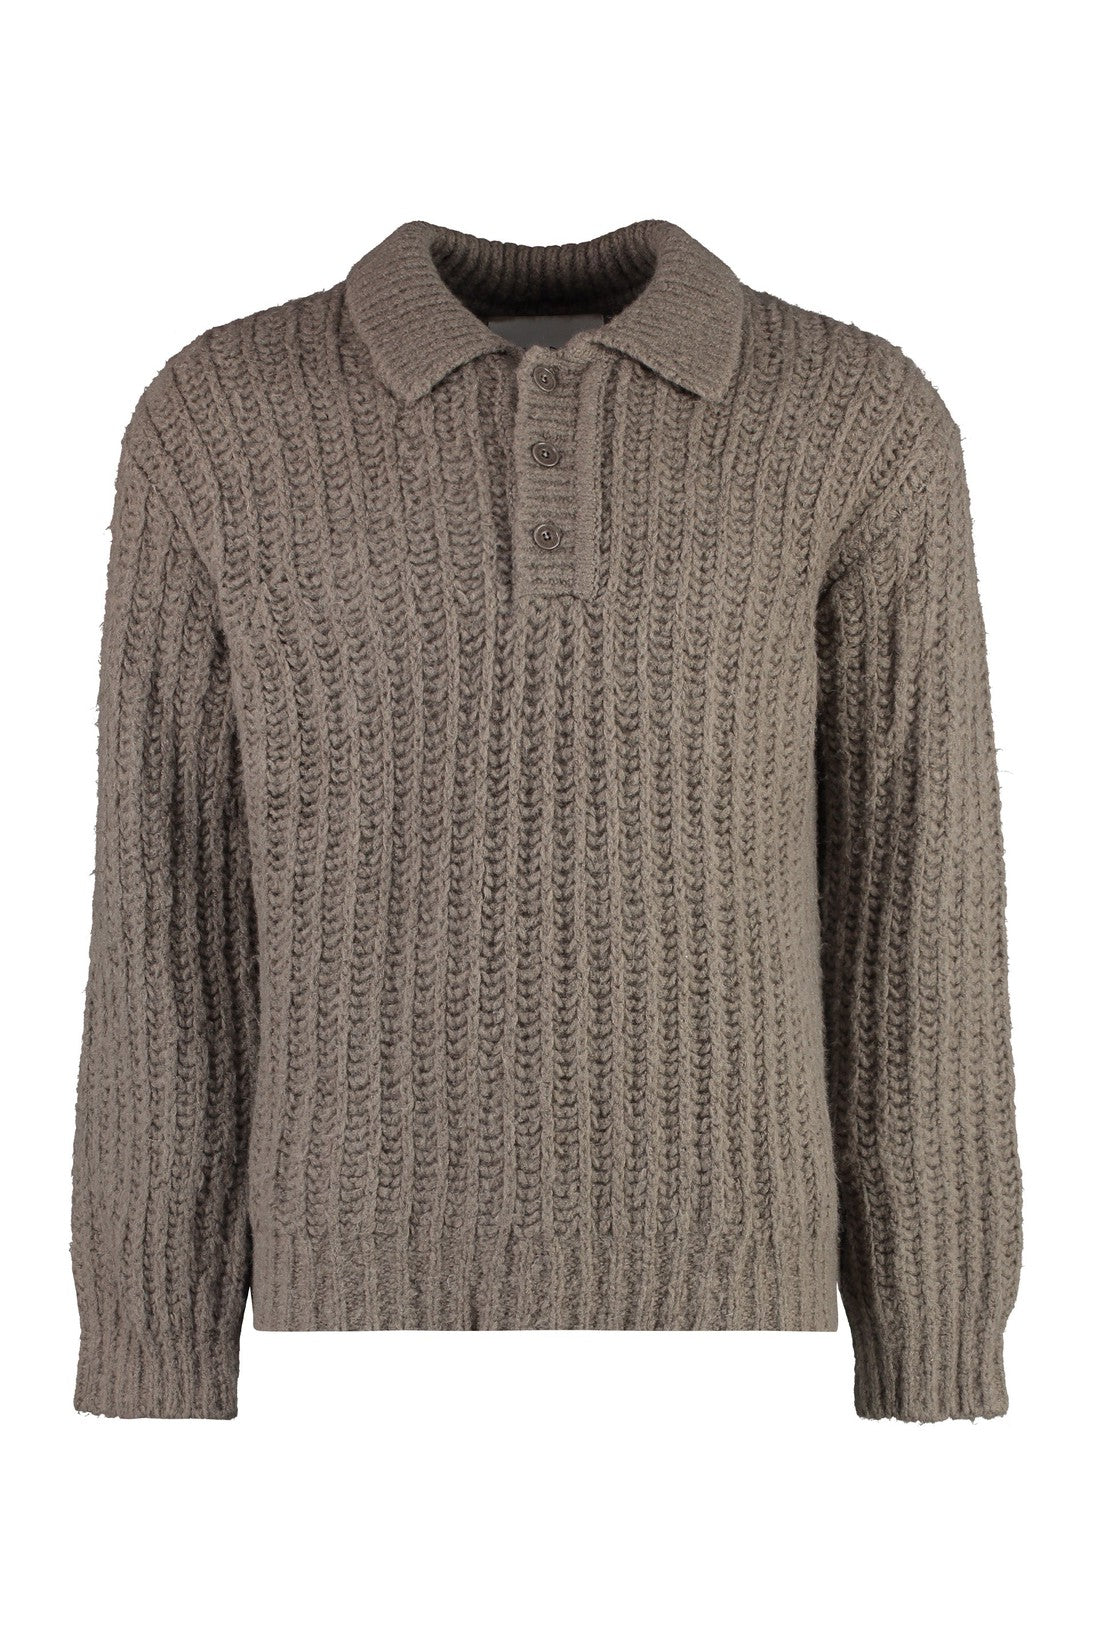 Wool-blend-crew-neck-sweater-GANT-designer-outlet-archivist.jpg